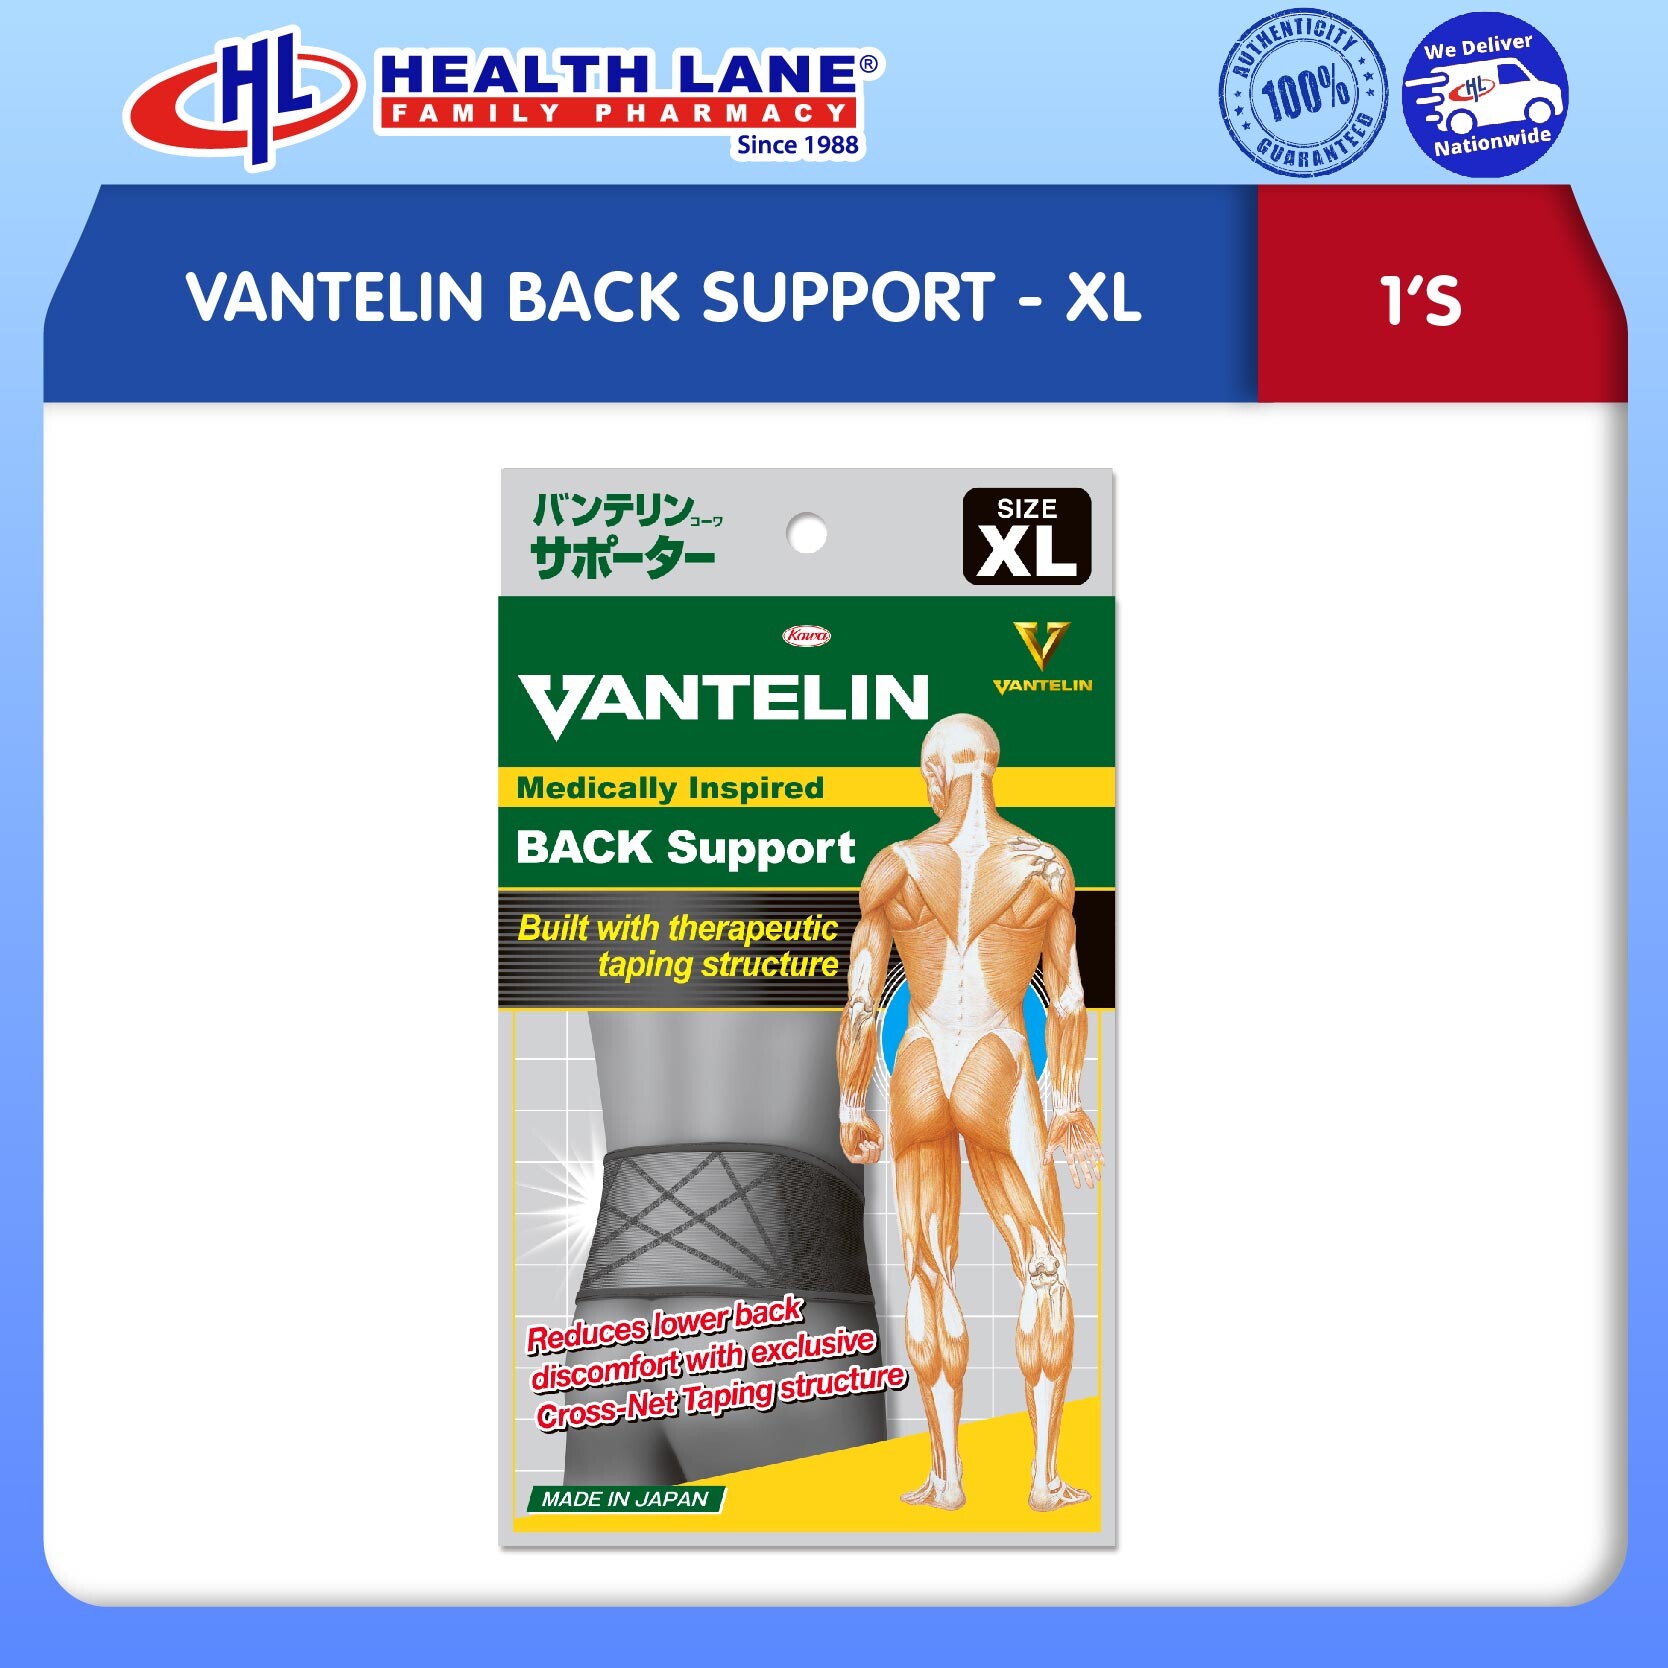 VANTELIN BACK SUPPORT - (XL)